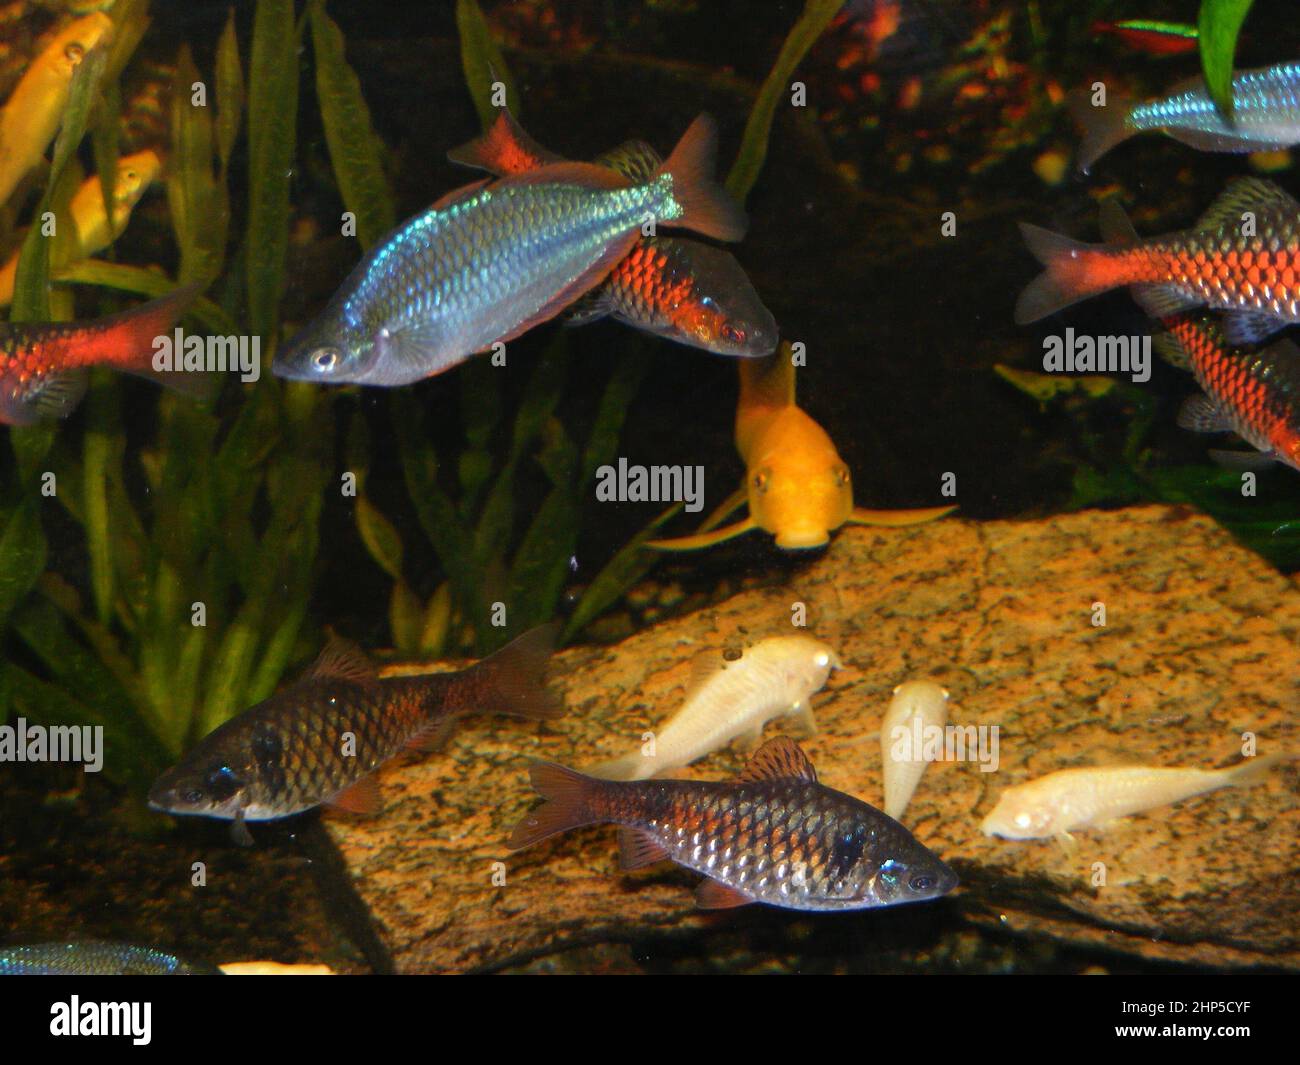 Variety of brightly coloured tropical aquarium fish Stock Photo